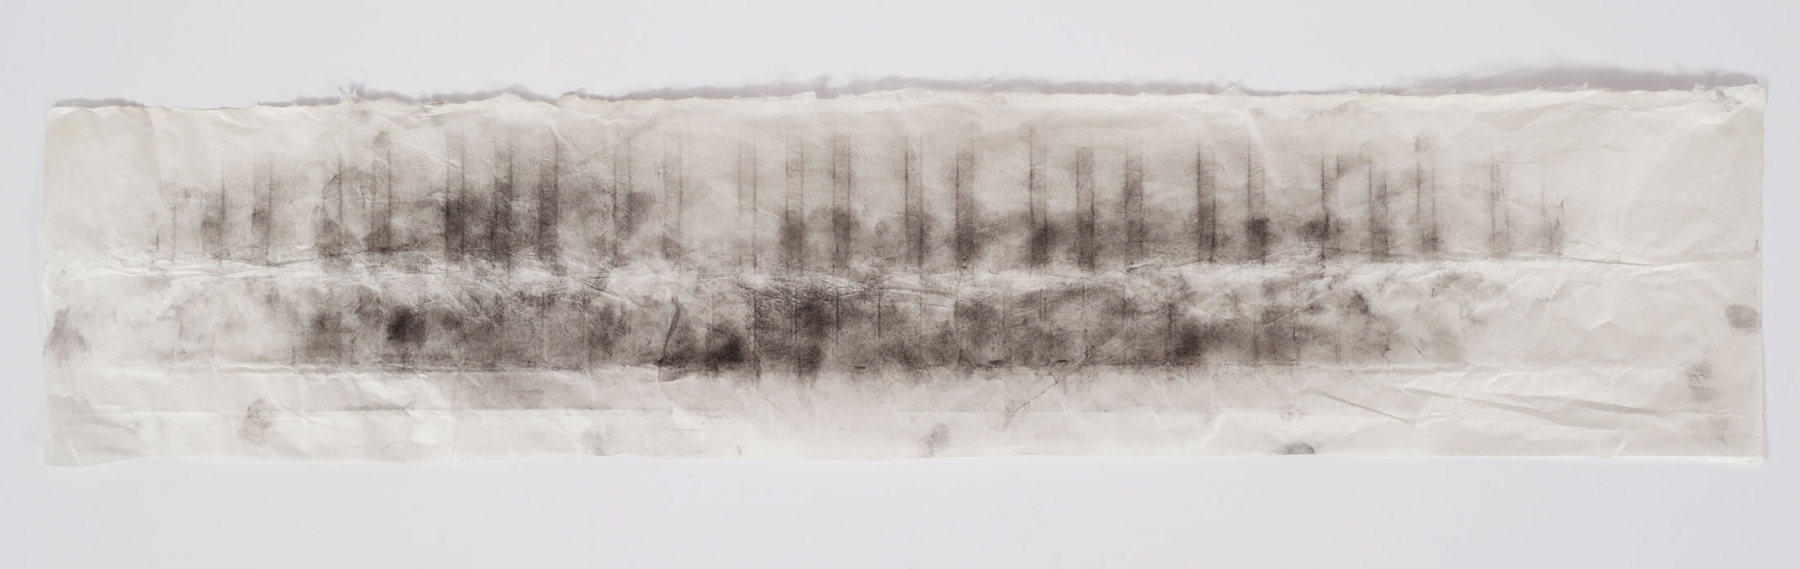 Jason Moran
Run 3, 2016
Charcoal on paper
8 1/2 x 38 1/4 inches
(21.6 x 97.2 cm)